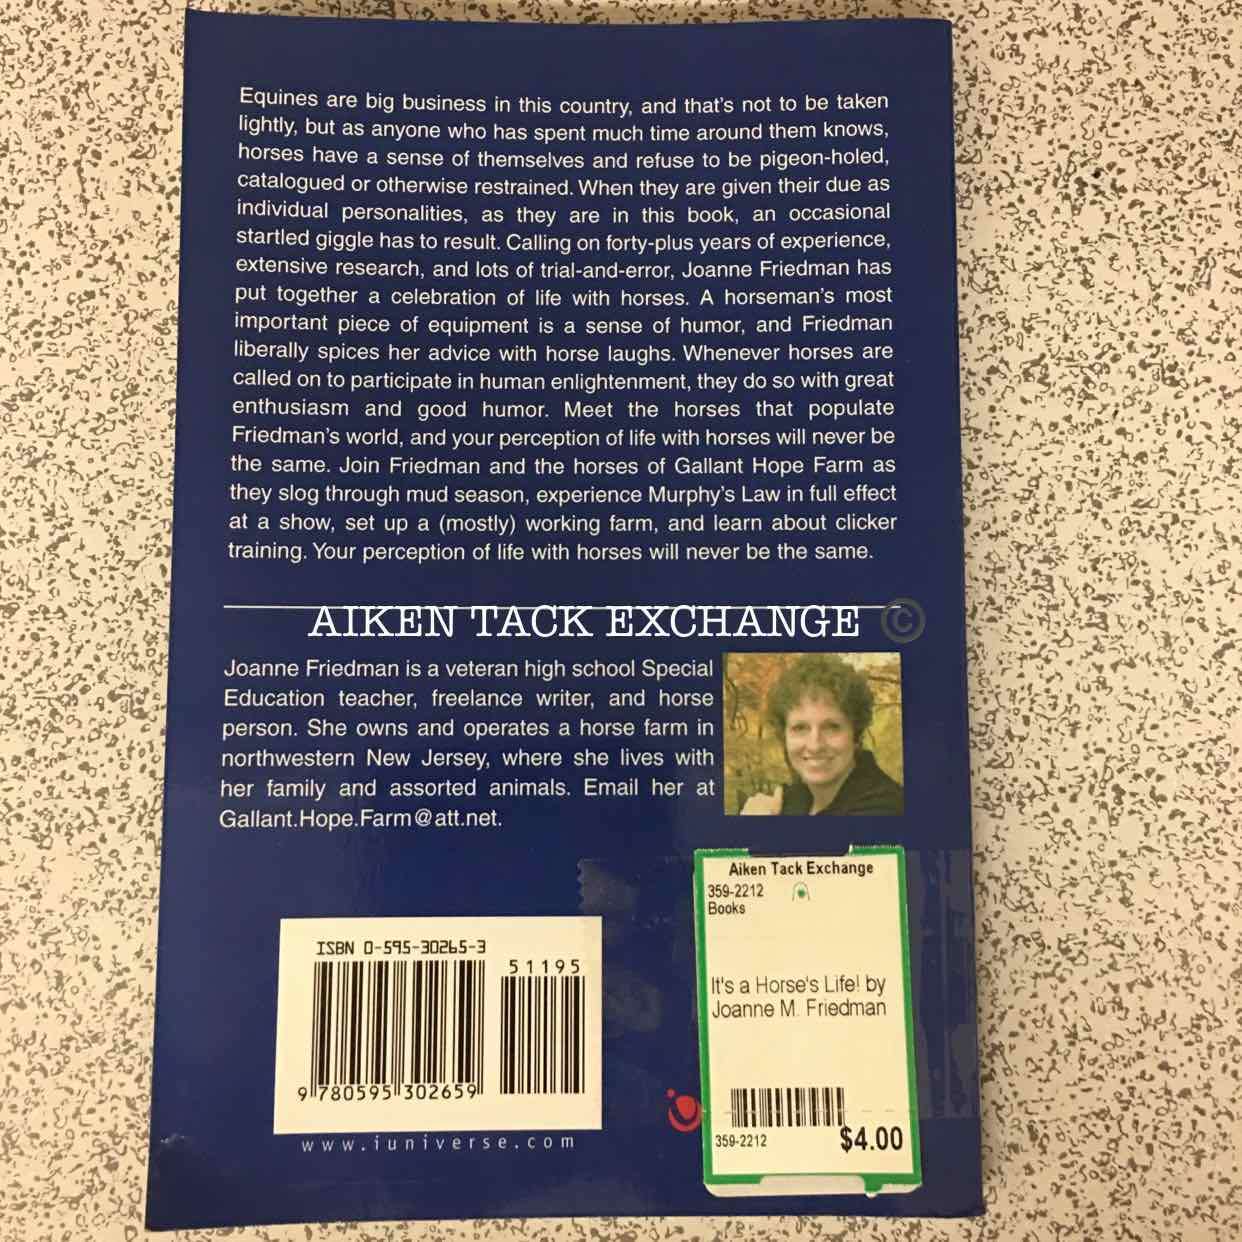 It's a Horse's Life! by Joanne M. Friedman:Books:Aiken Tack Exchange:The Aiken Tack Exchange